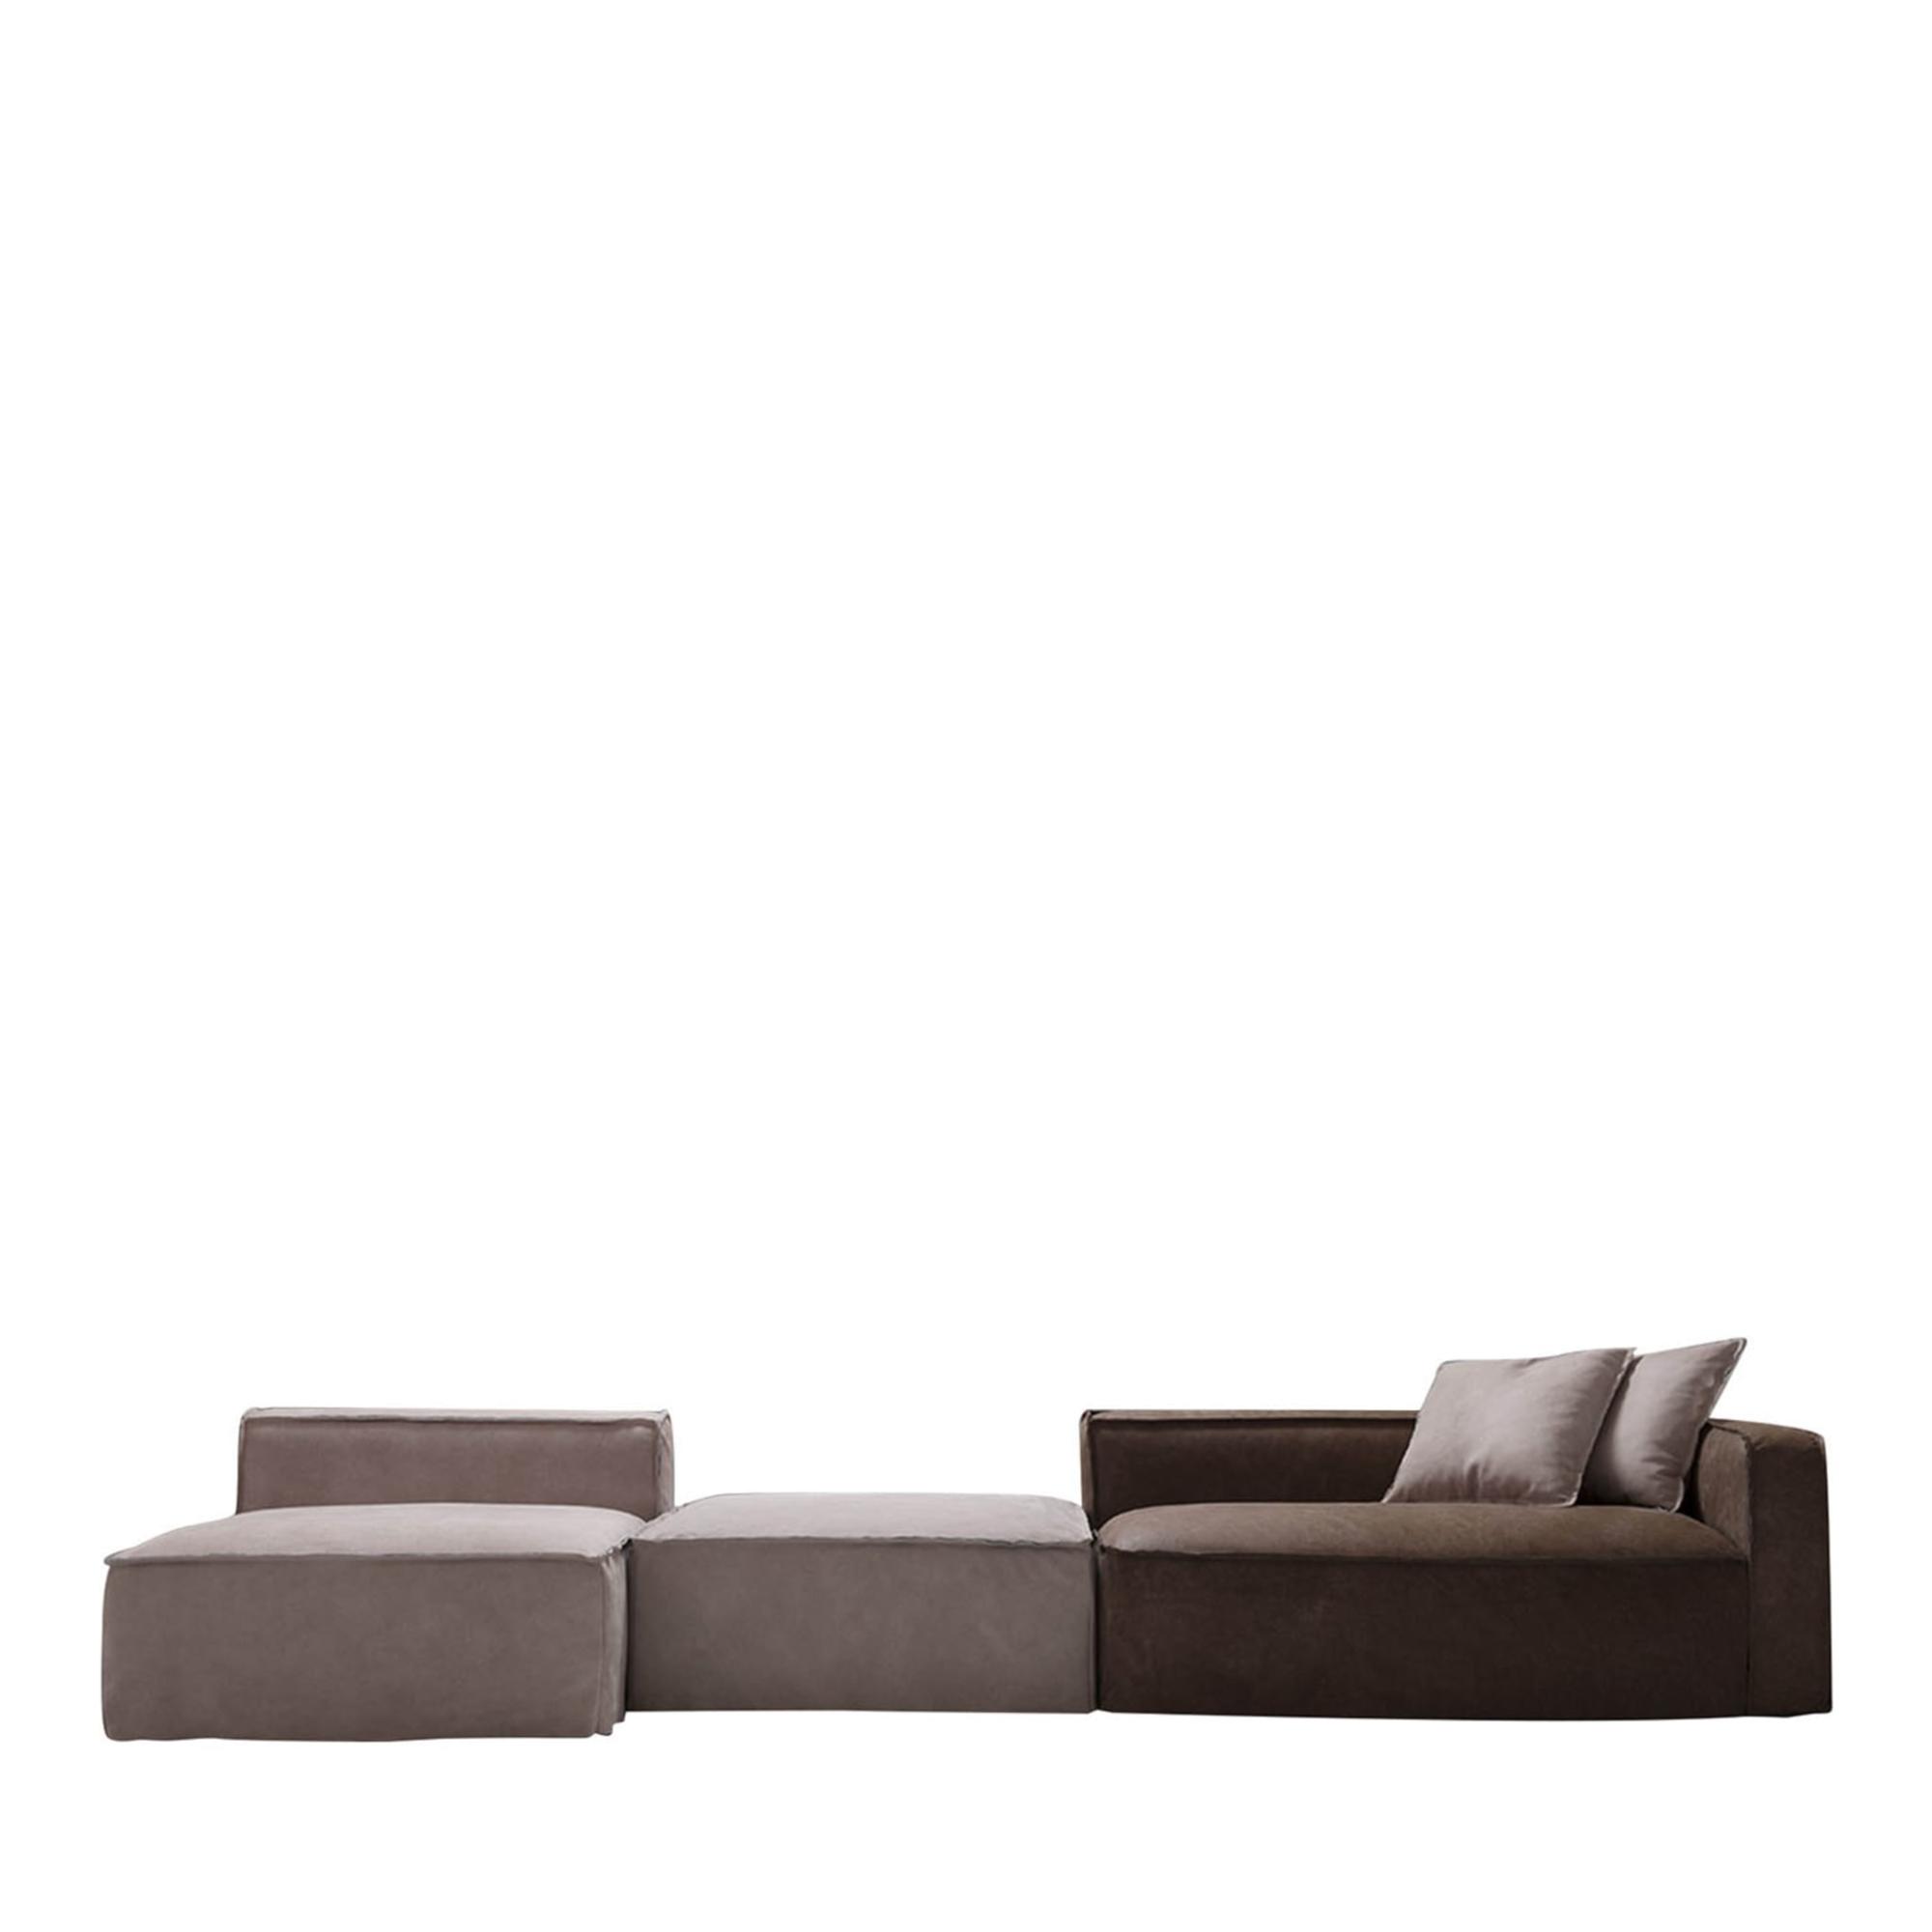 Softly Versatile Modular Sofa